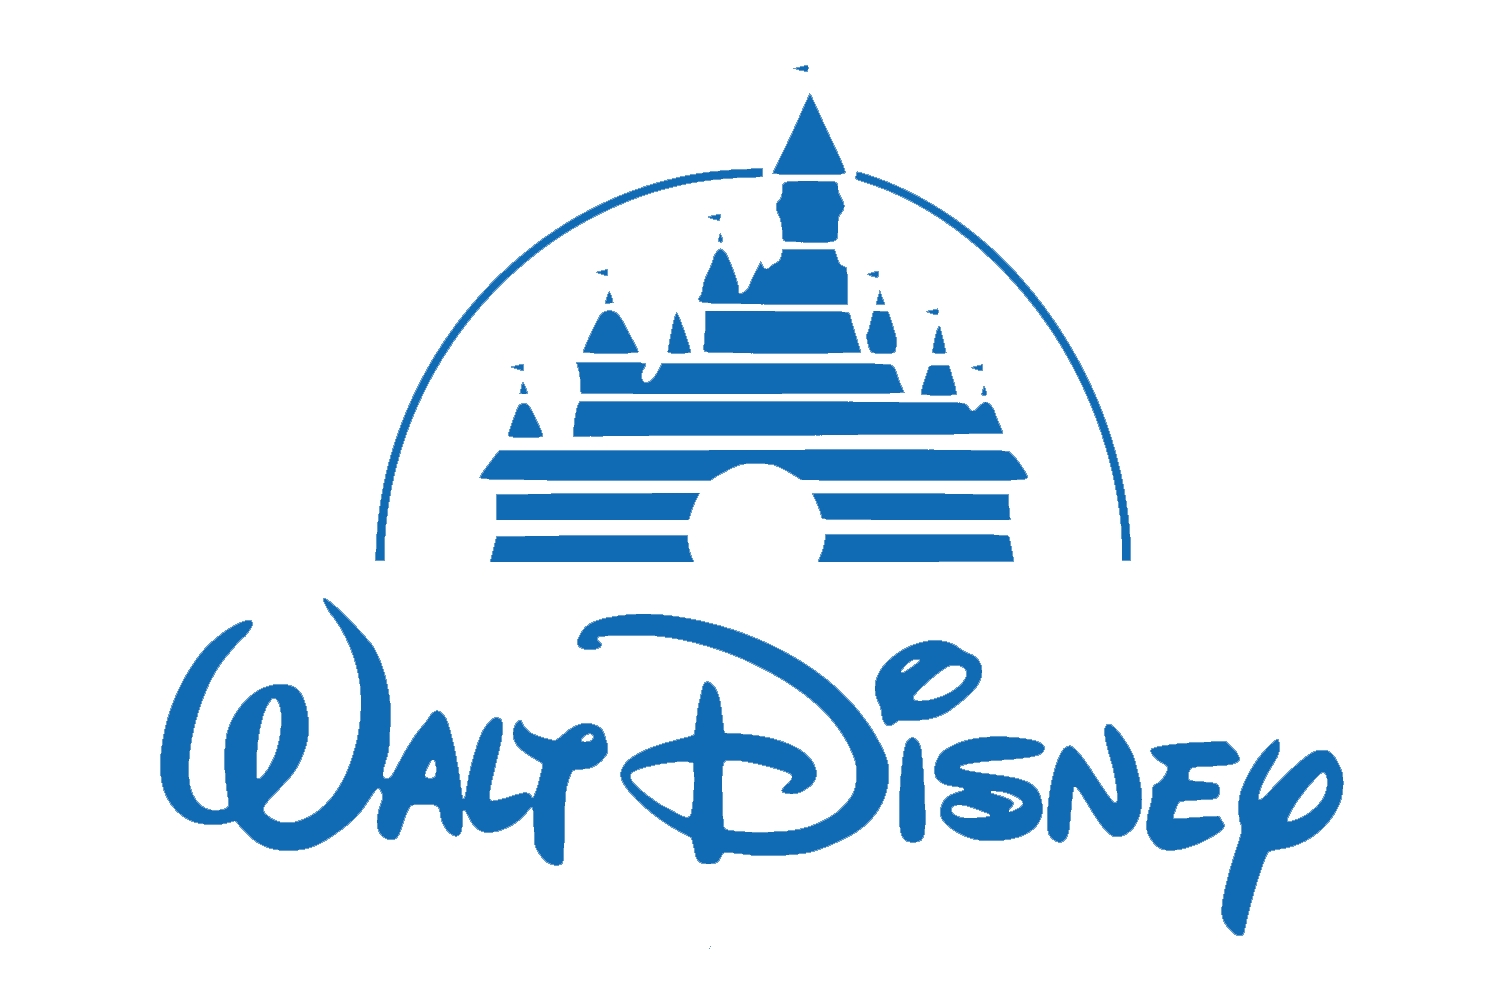 Image of Walt Disney company logo